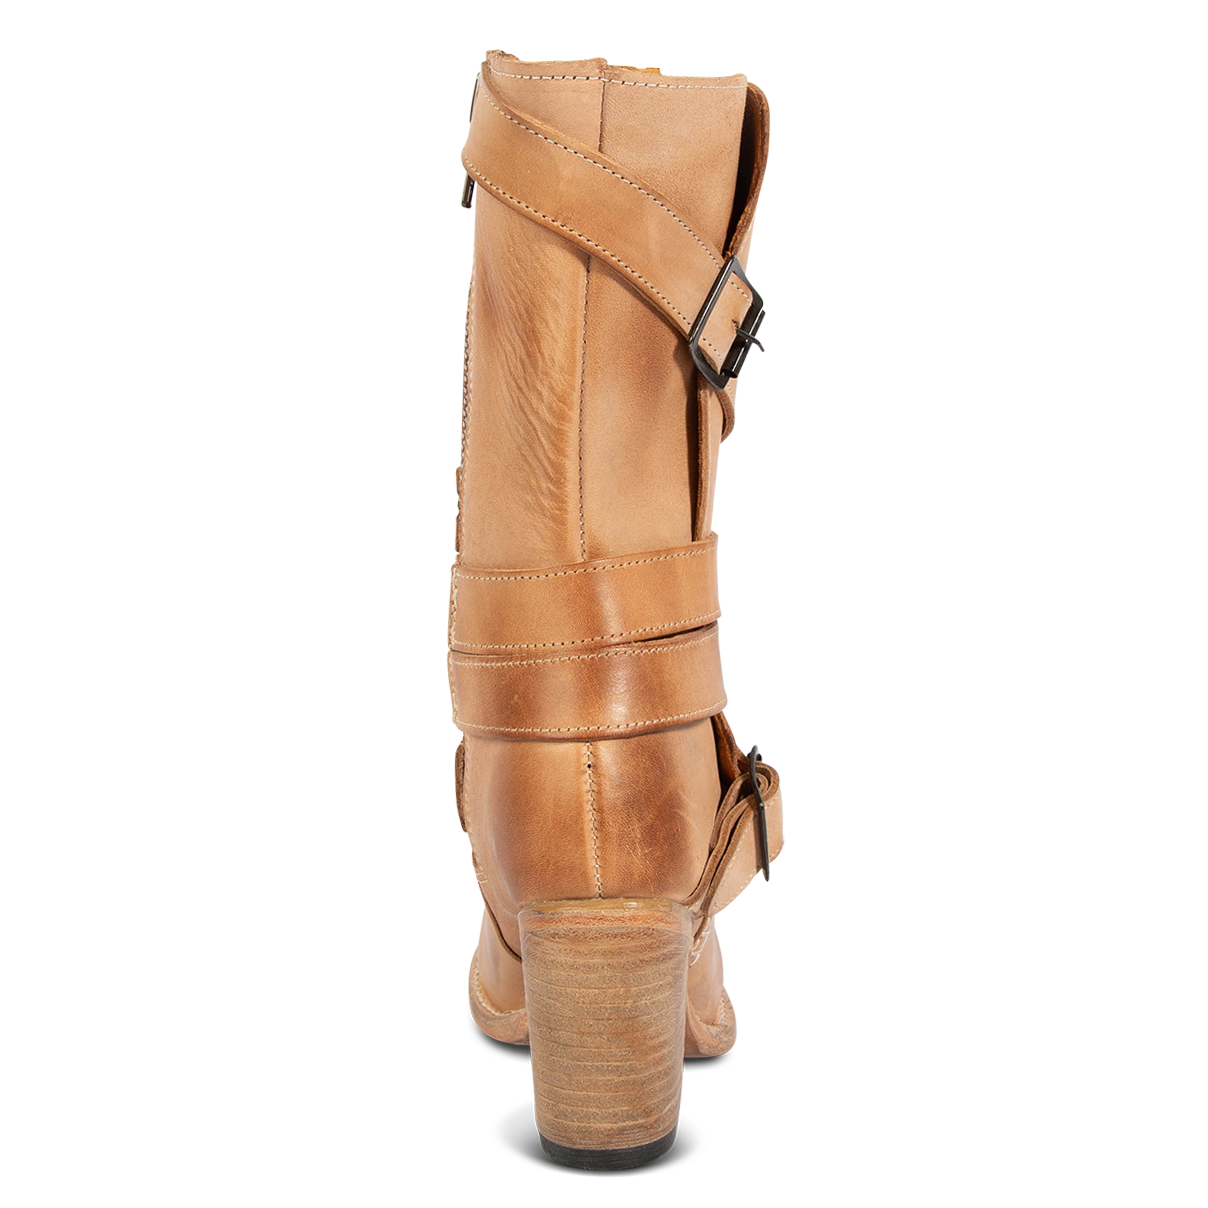 Back view showing tall heel on FREEBIRD women's Barker beige mid calf boot